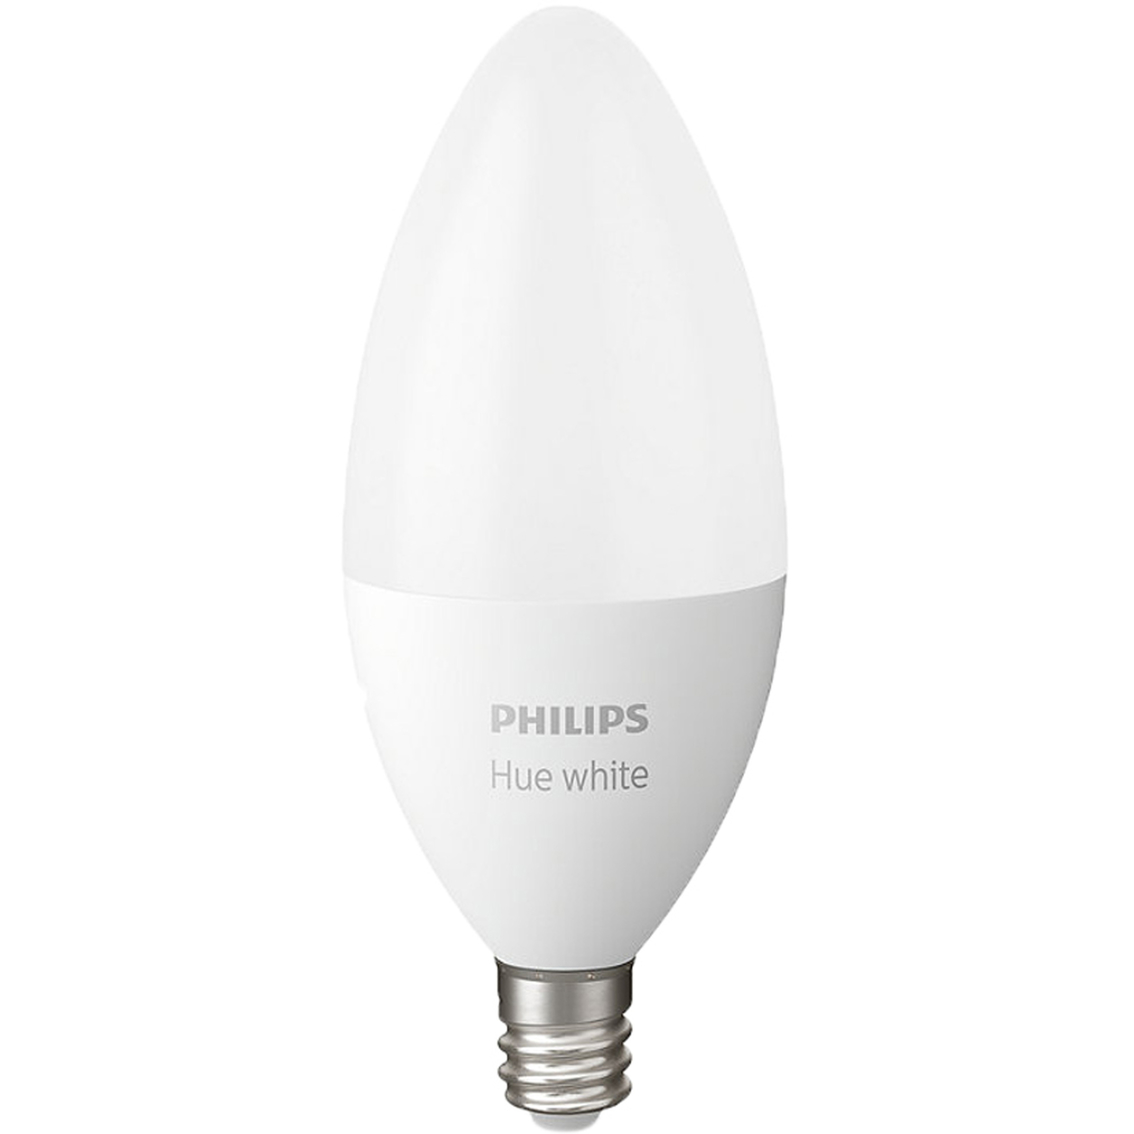 Philips Hue E12 White Smart Bulb 2 pk. - Image 2 of 2